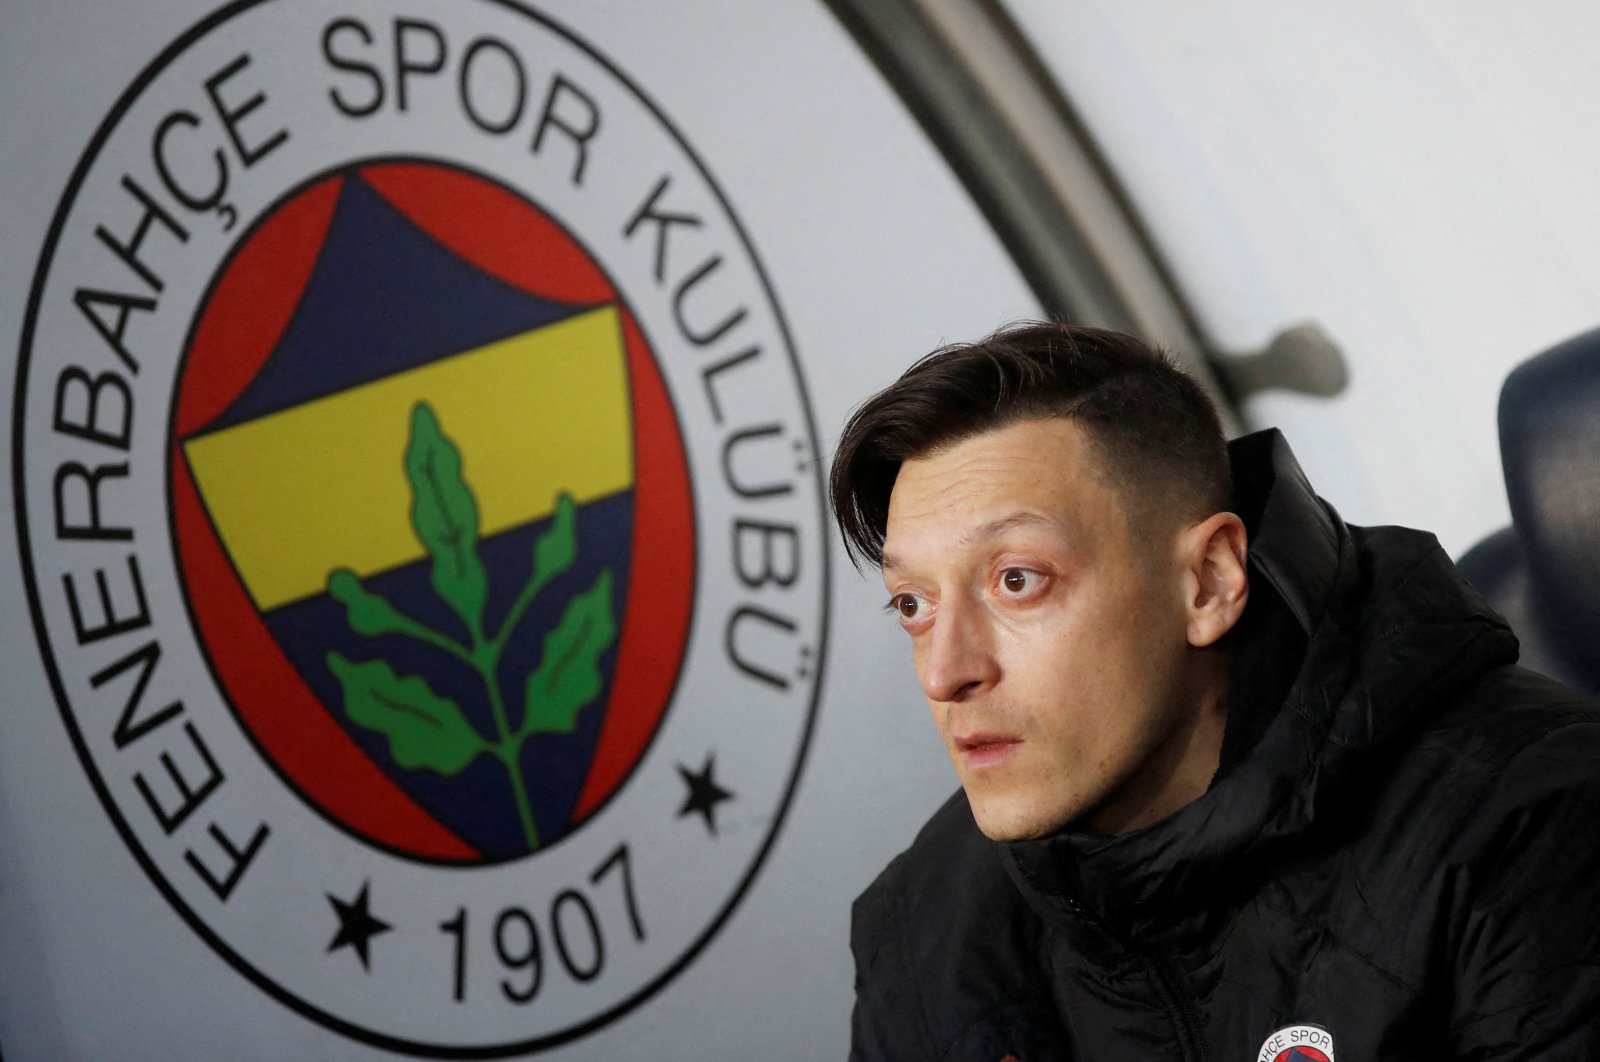 Fenerbahçe&#039;s Mesut Özil speaks before a match at Şükrü Saraçoğlu Stadium, Istanbul, Turkey, March 6, 2022. (Reuters Photo)